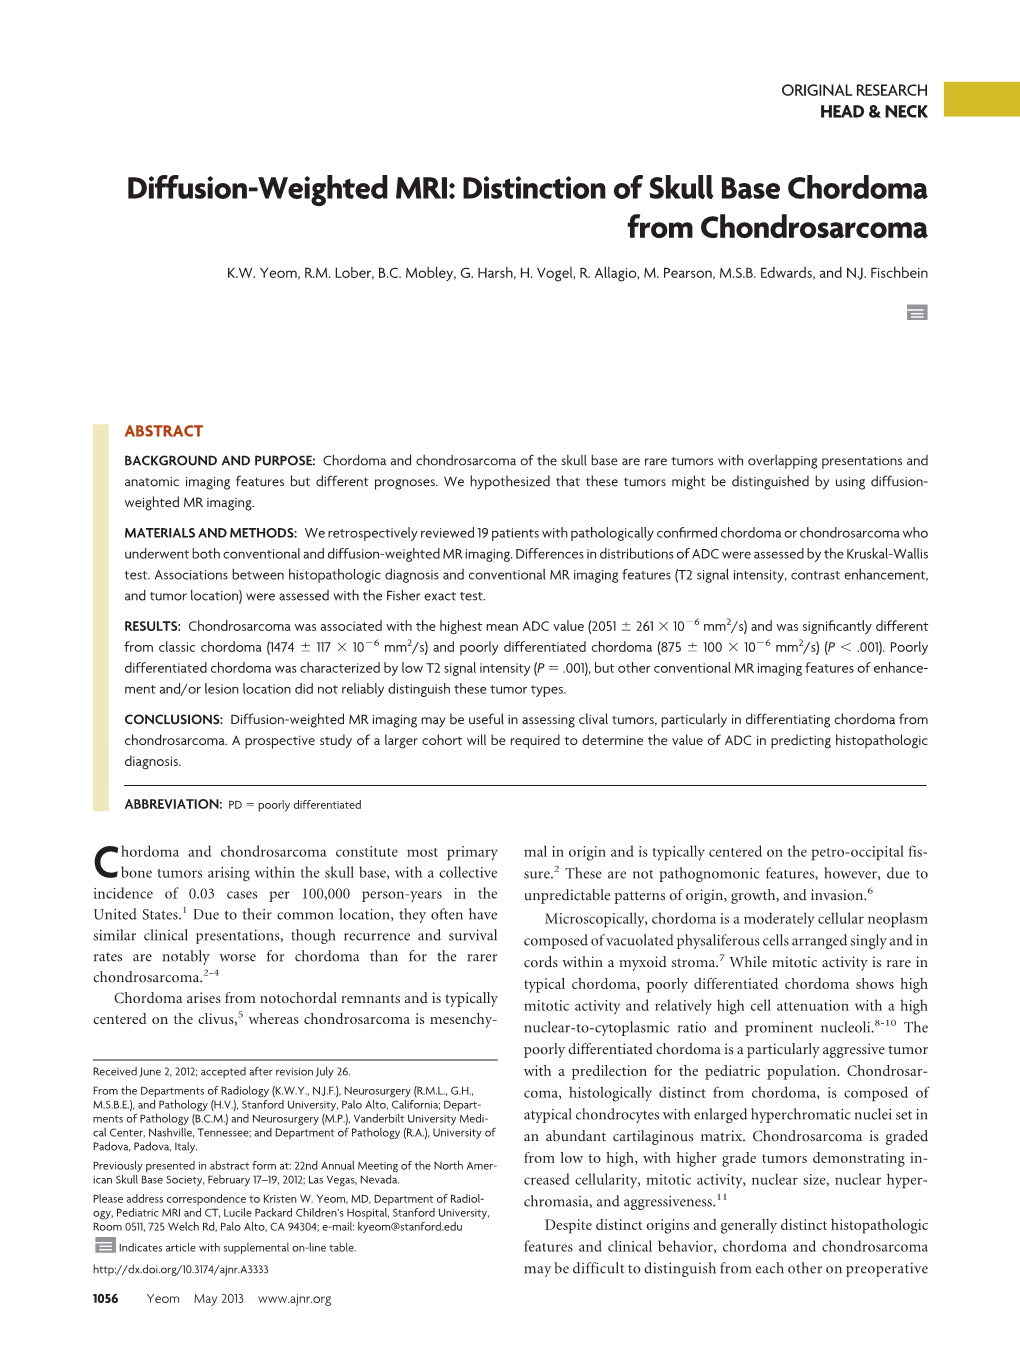 Diffusion-Weighted MRI: Distinction of Skull Base Chordoma from Chondrosarcoma